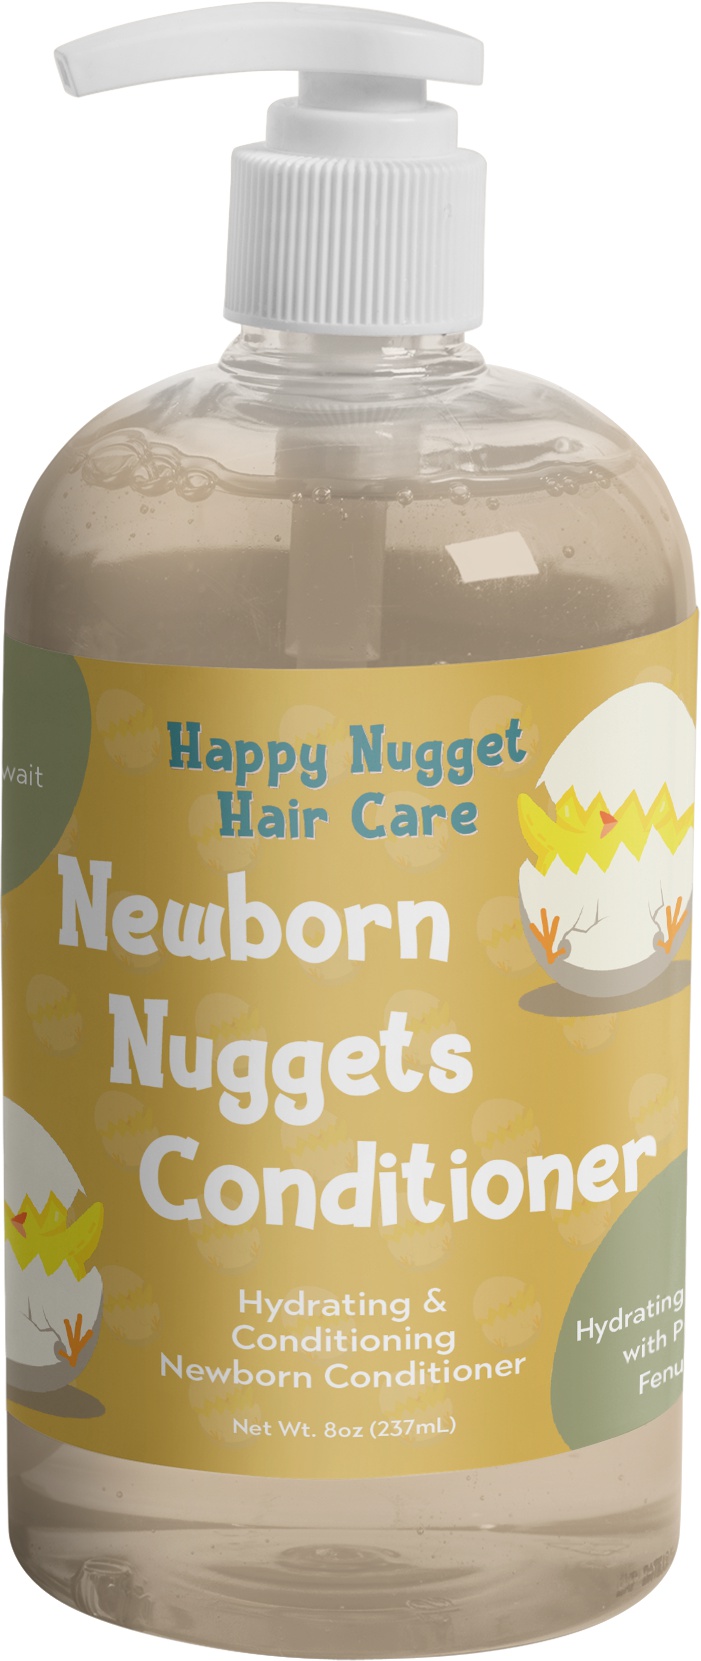 Happy Nugget Hair Care Newborn Nugget Conditioner